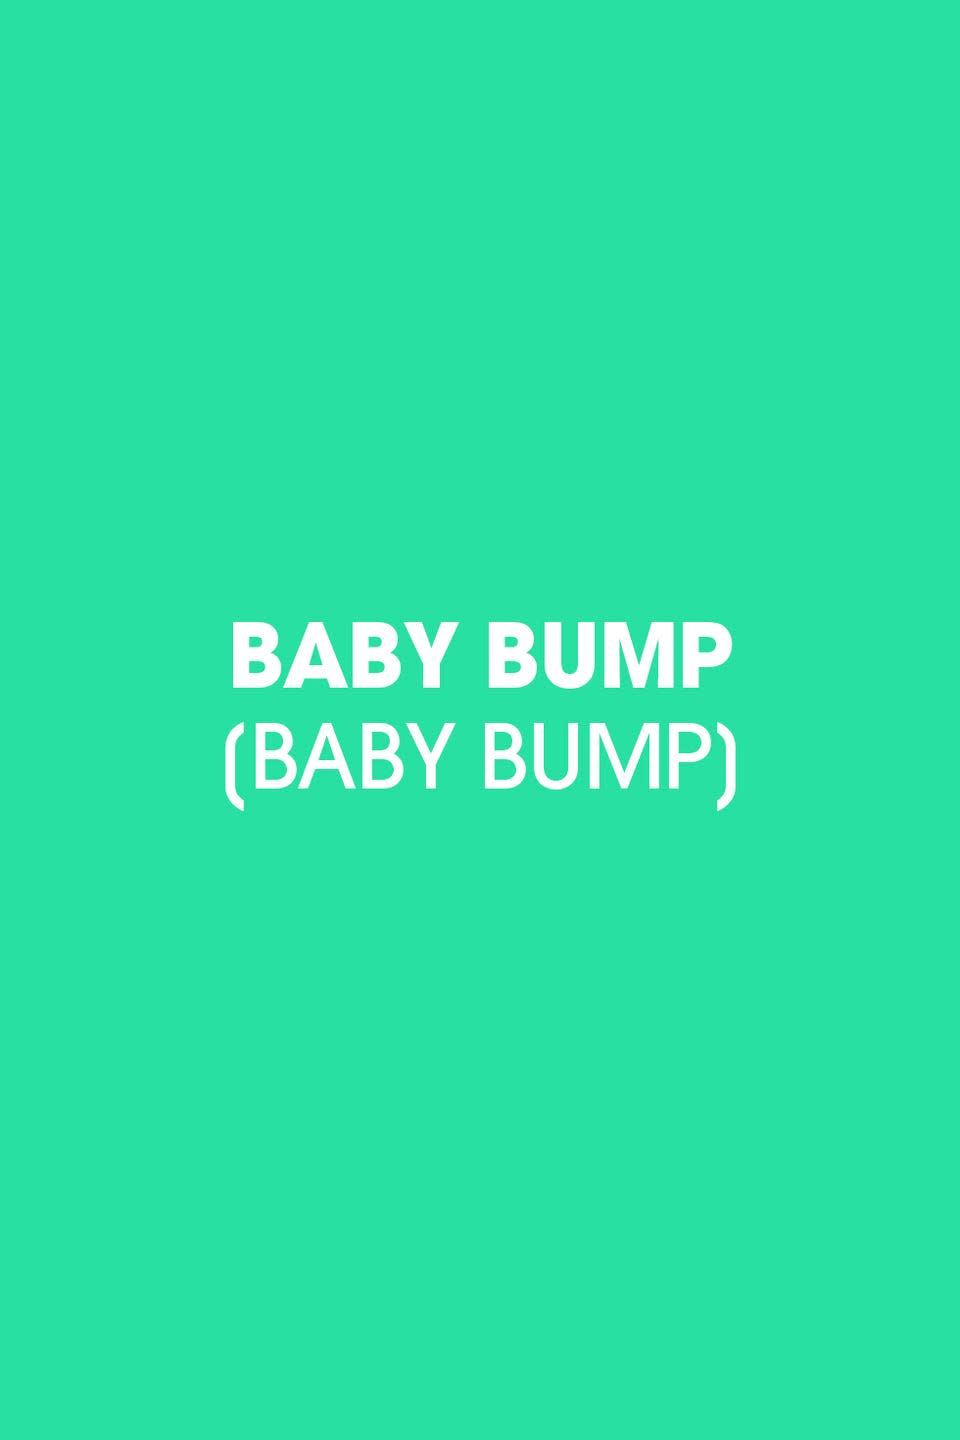 2003: Baby Bump